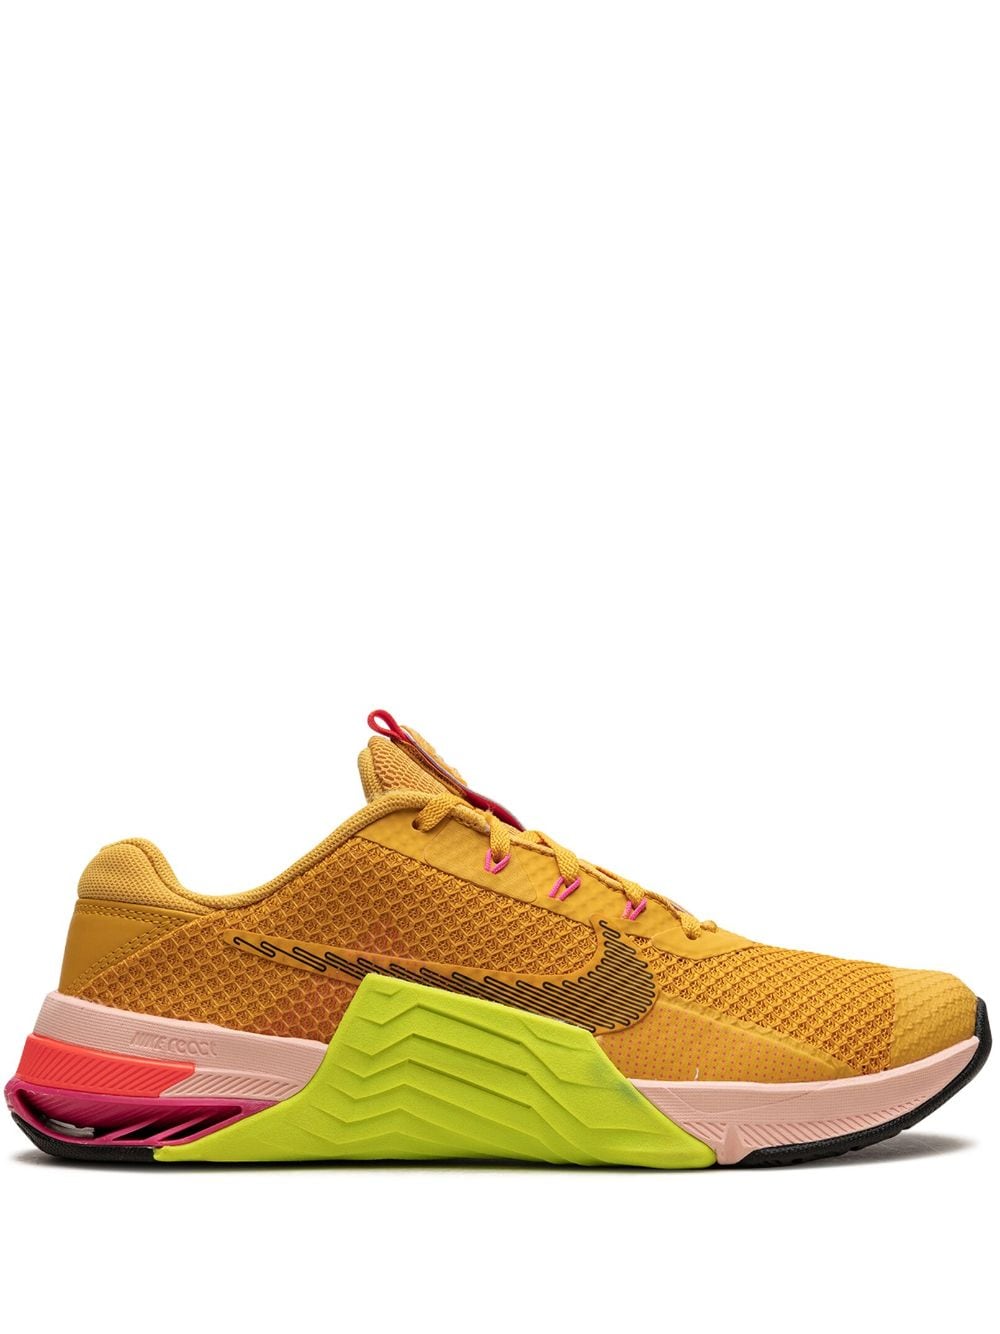 Nike Metcon 7 "Pollen/Volt/Pale Coral/Black" sneakers - Yellow von Nike